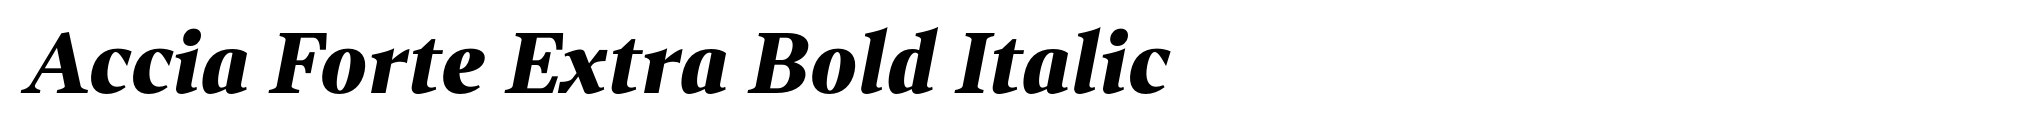 Accia Forte Extra Bold Italic image